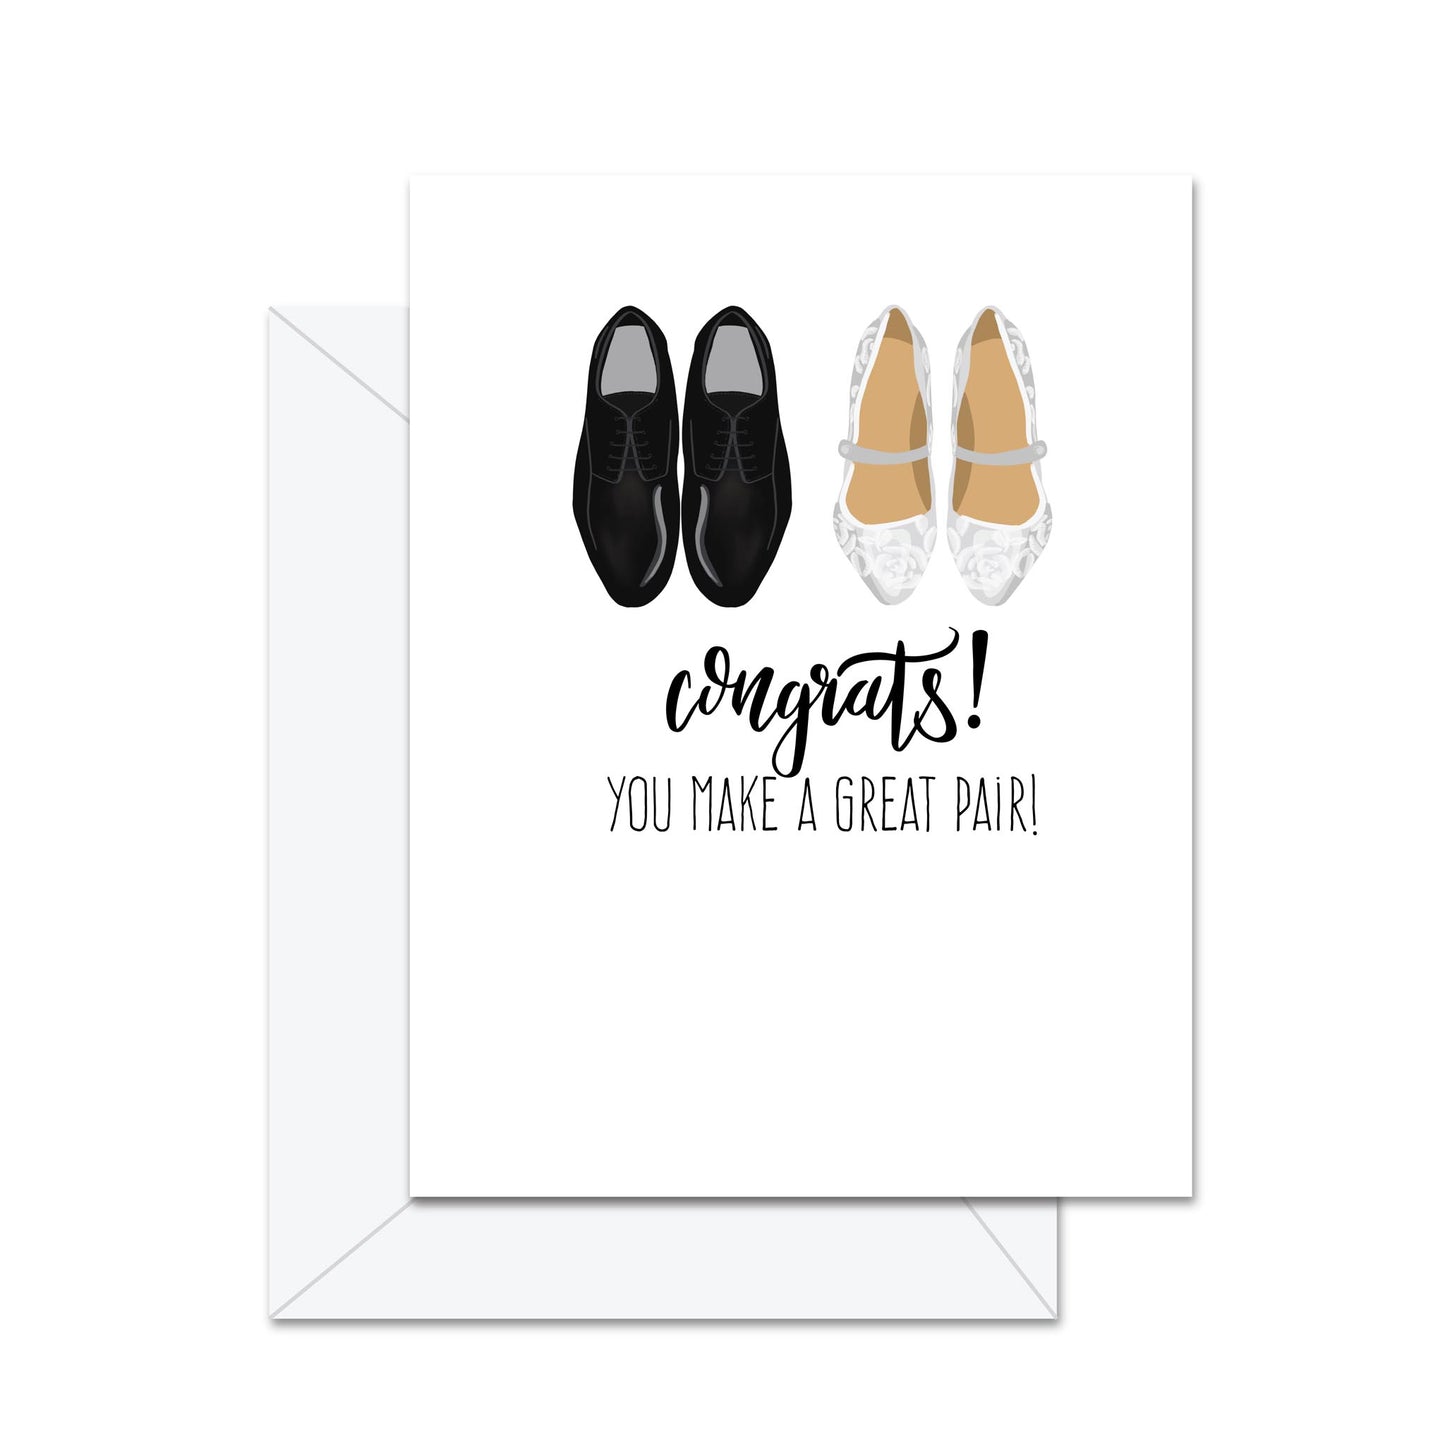 Congrats! You Make A Great Pair! - Greeting Card